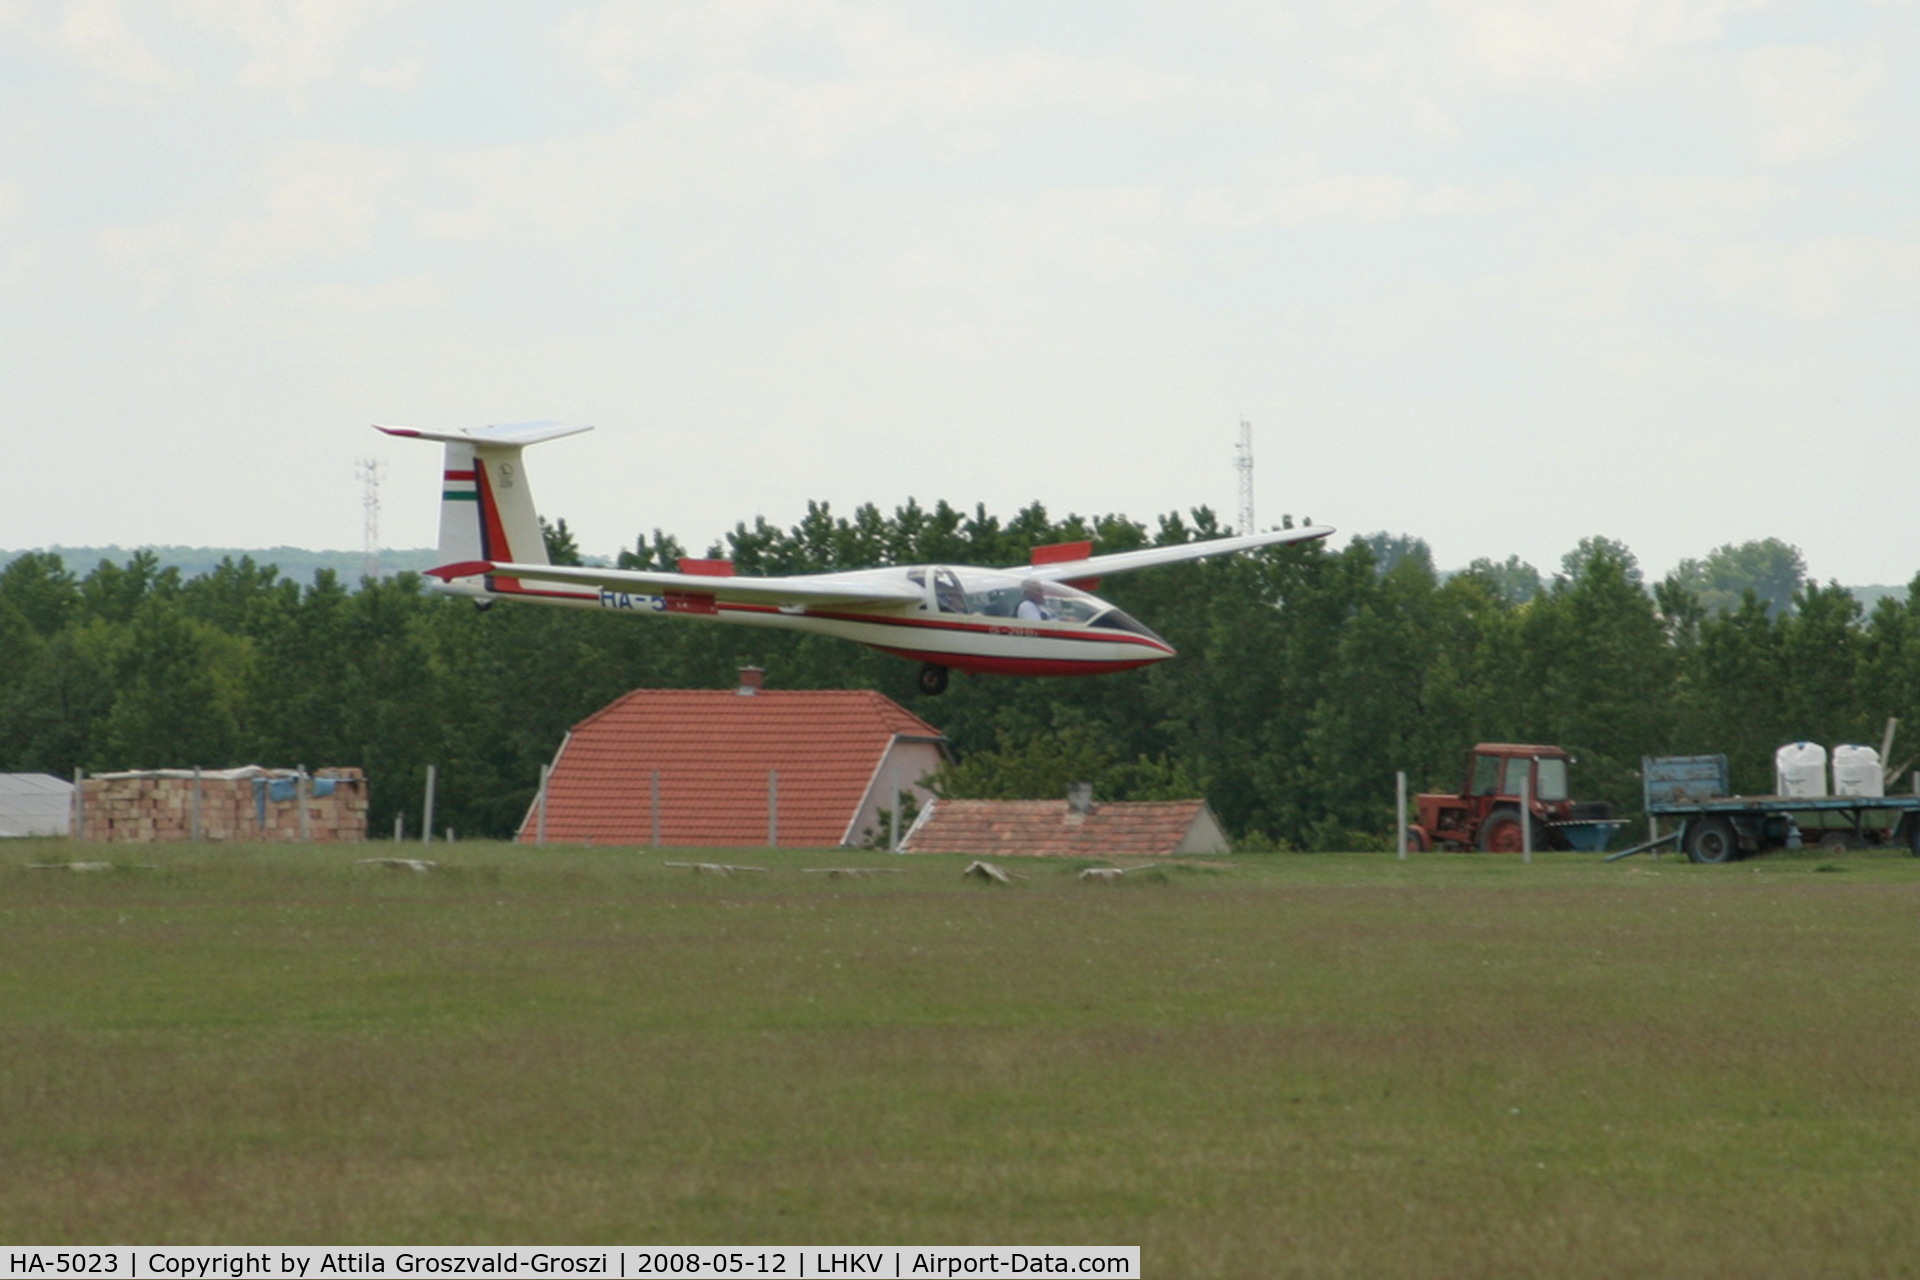 HA-5023, 1981 ICA-Brasov IS-28B2 C/N 329, LHKV - Kaposujlak Airport, Hungary